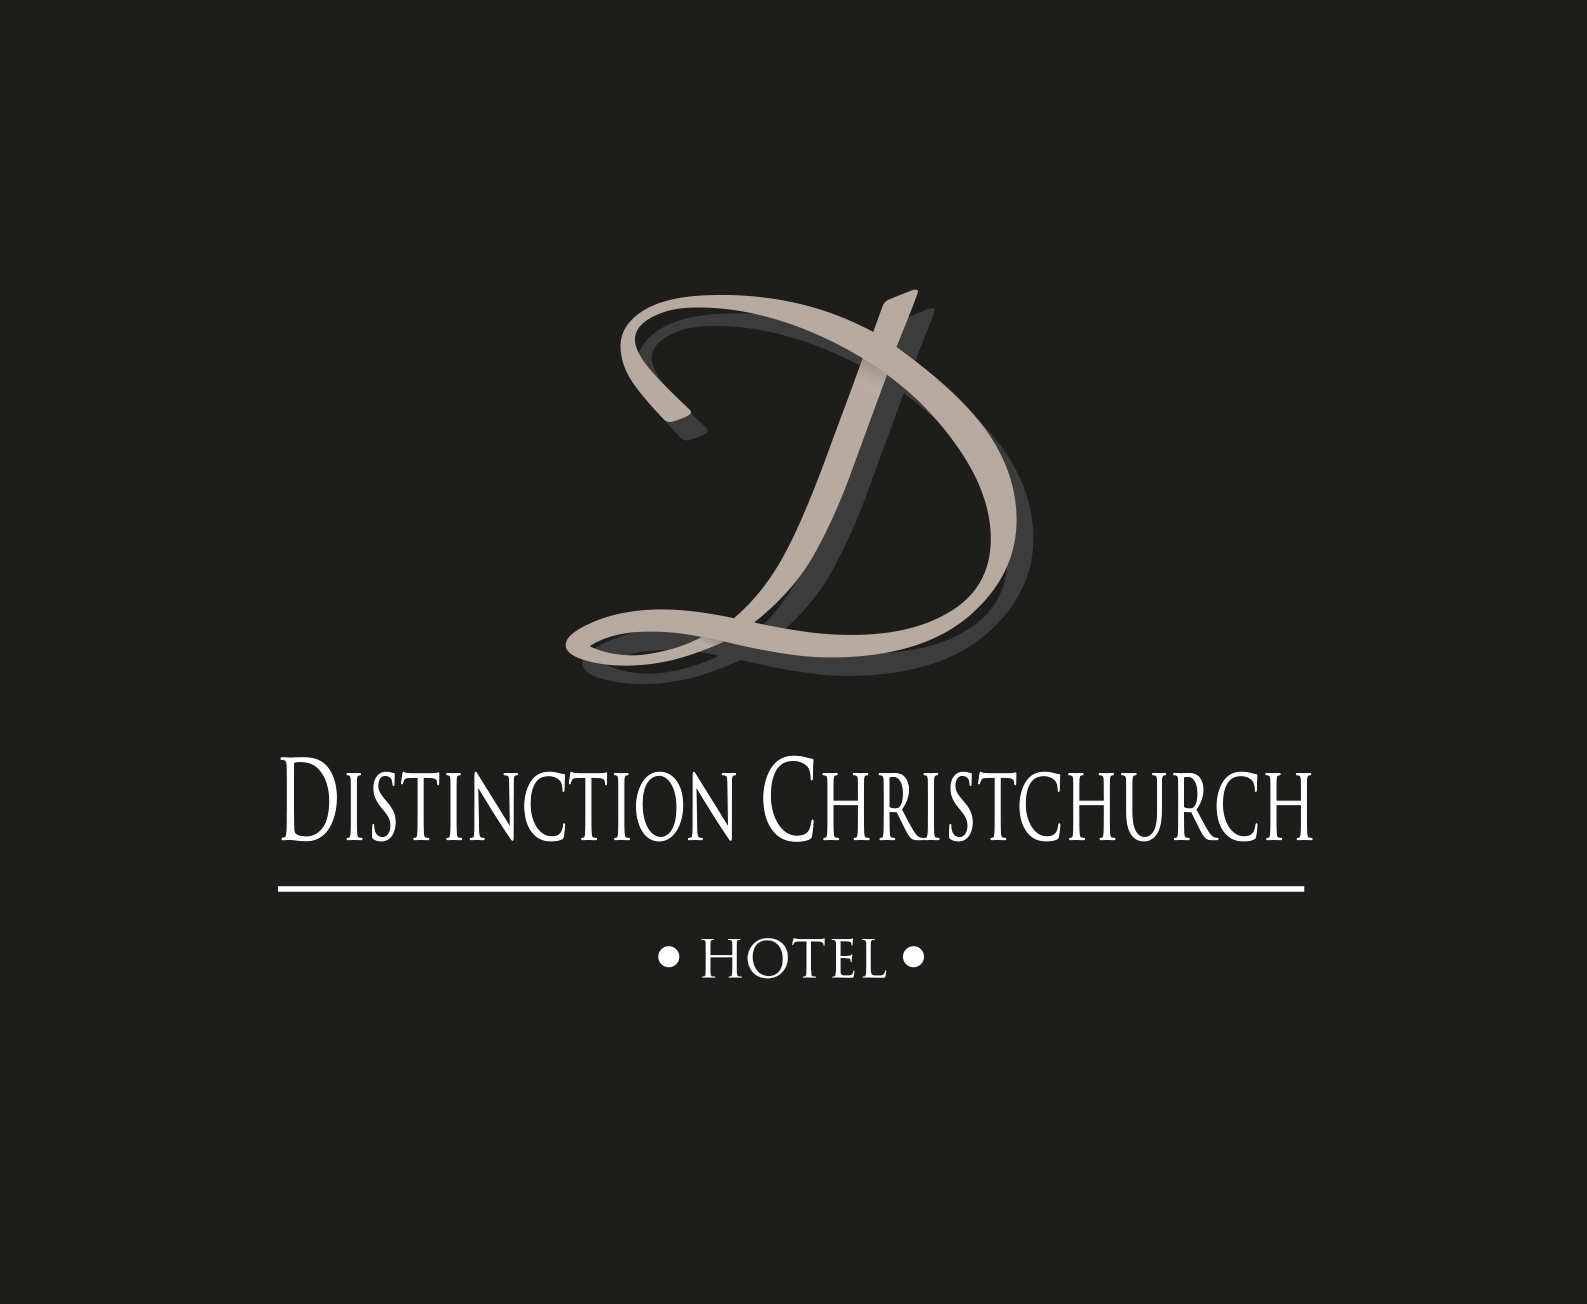 
Distinction Christchurch Hotel